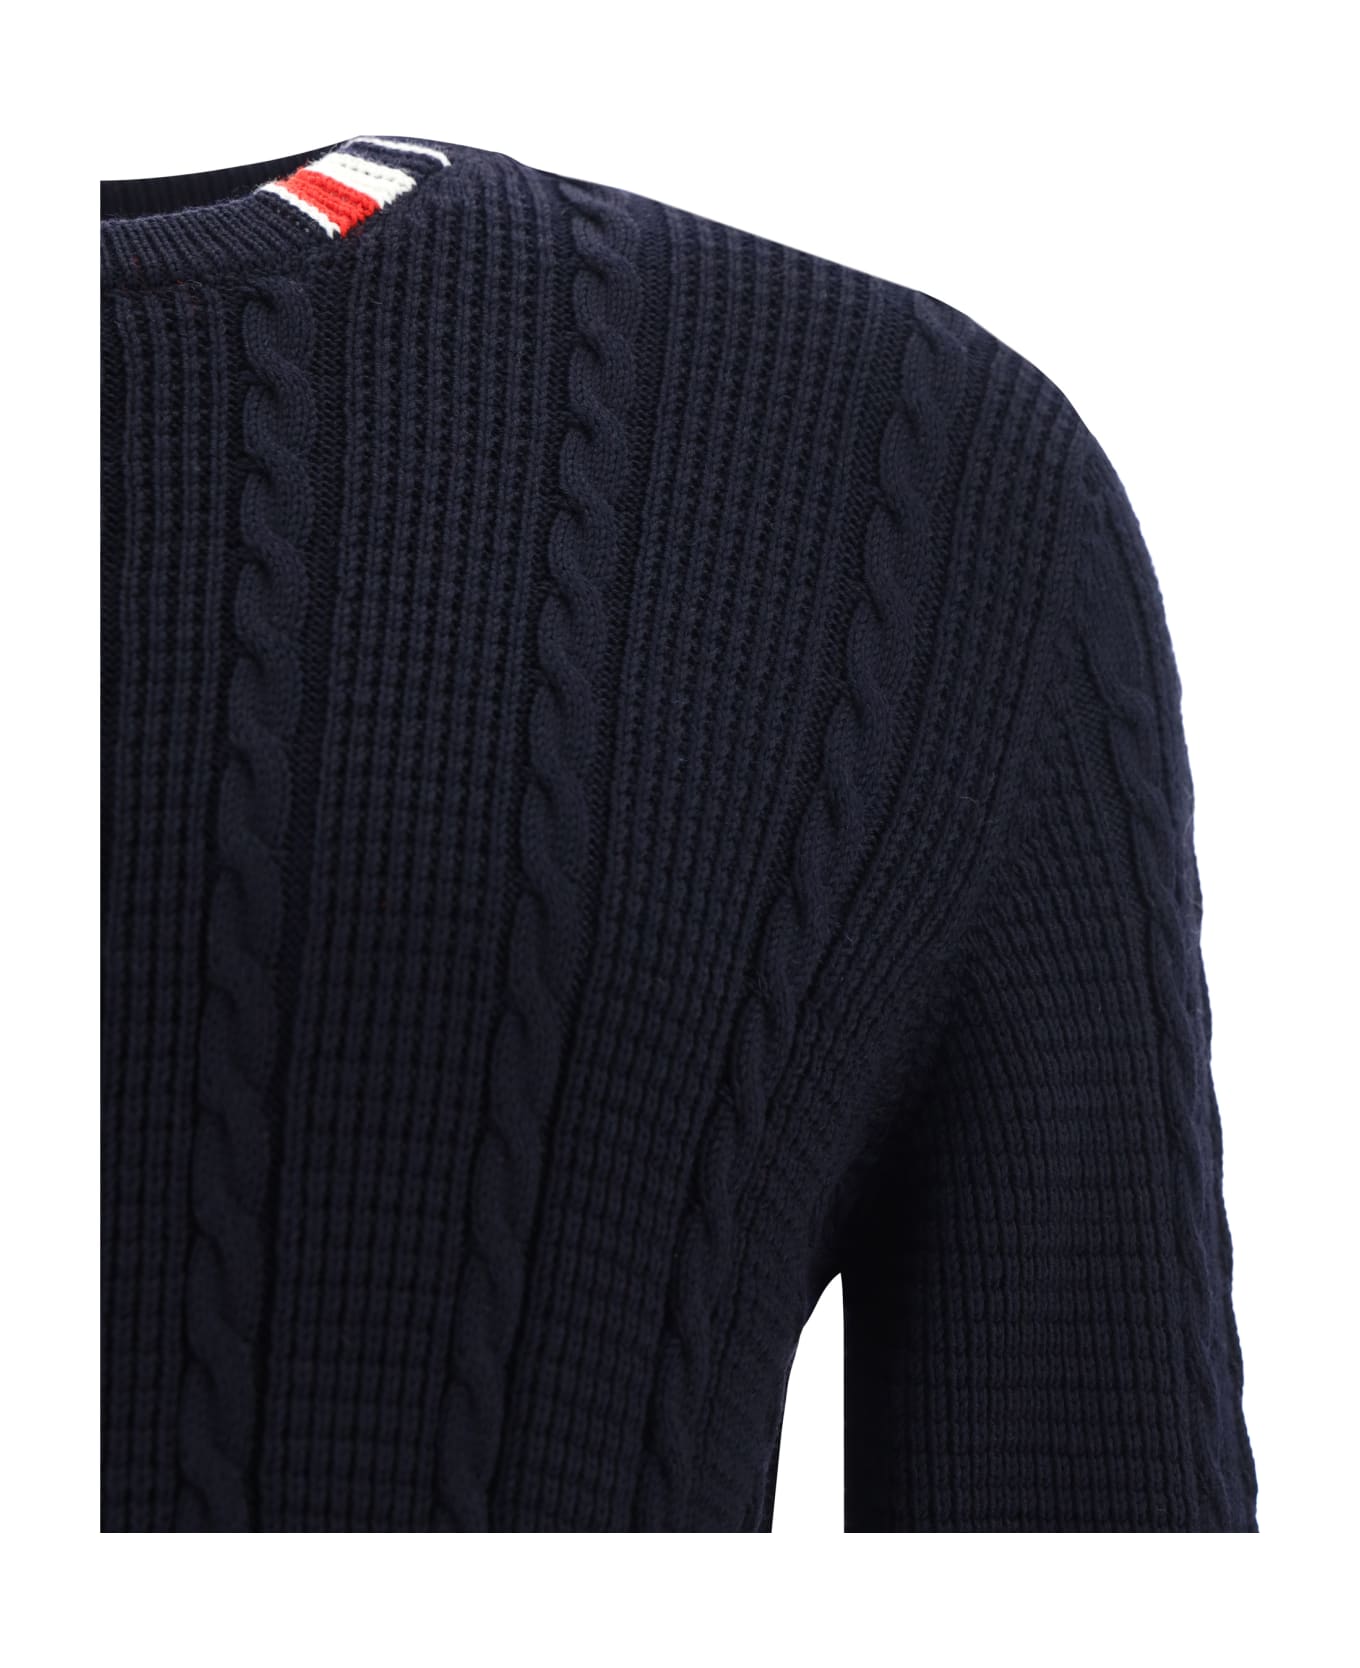 Thom Browne Sweater - Navy